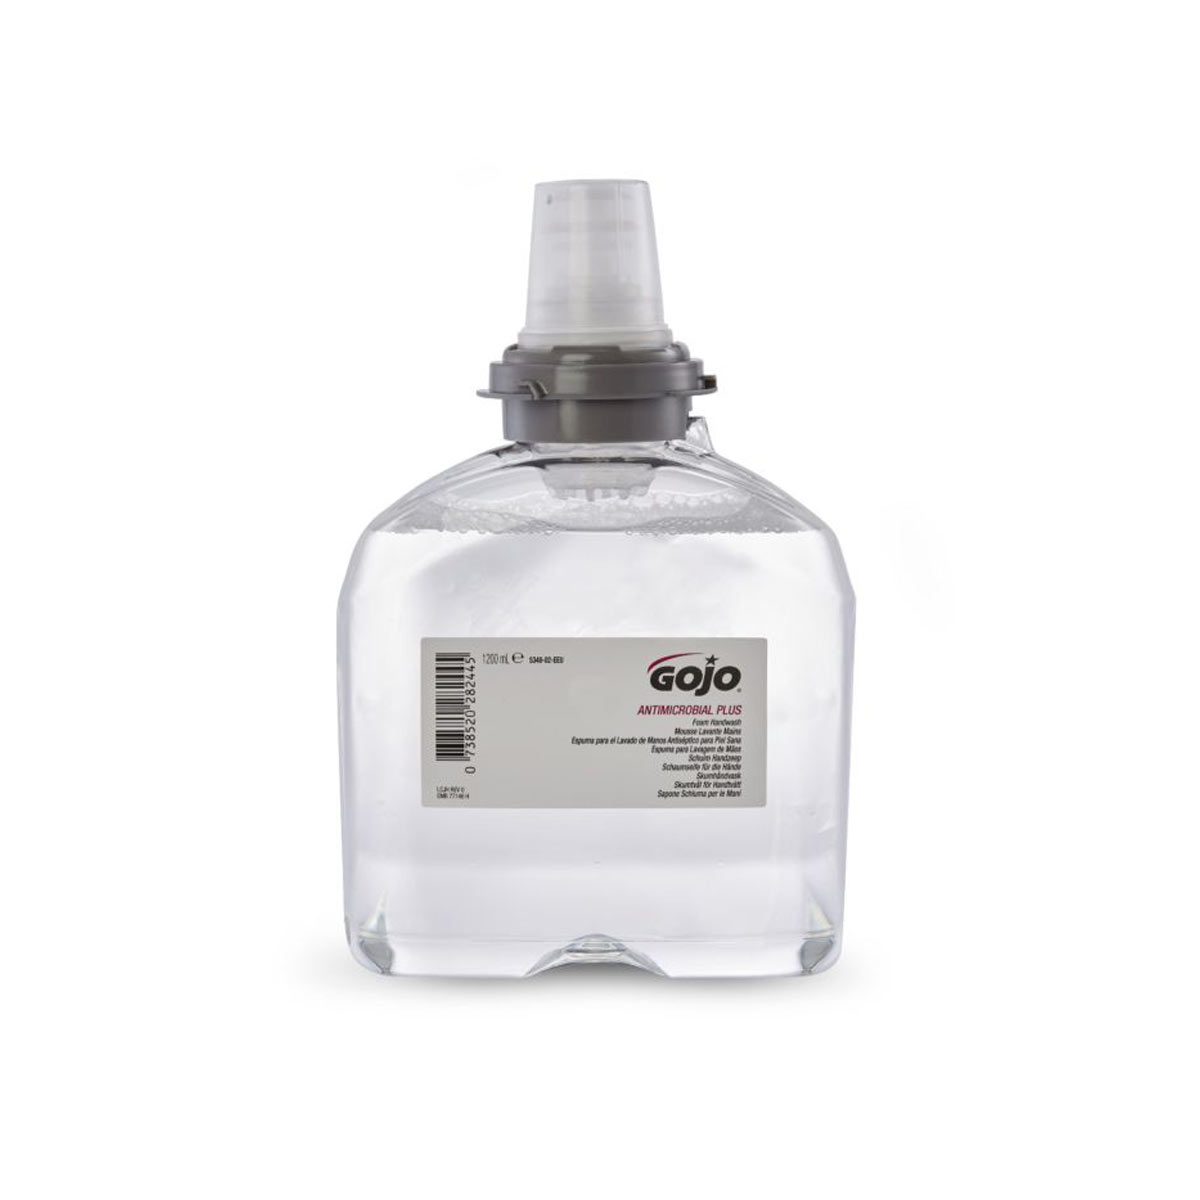 GOJO® Antimicrobial Plus Foam Handwash - Refill for GOJO® TFX™ Dispenser